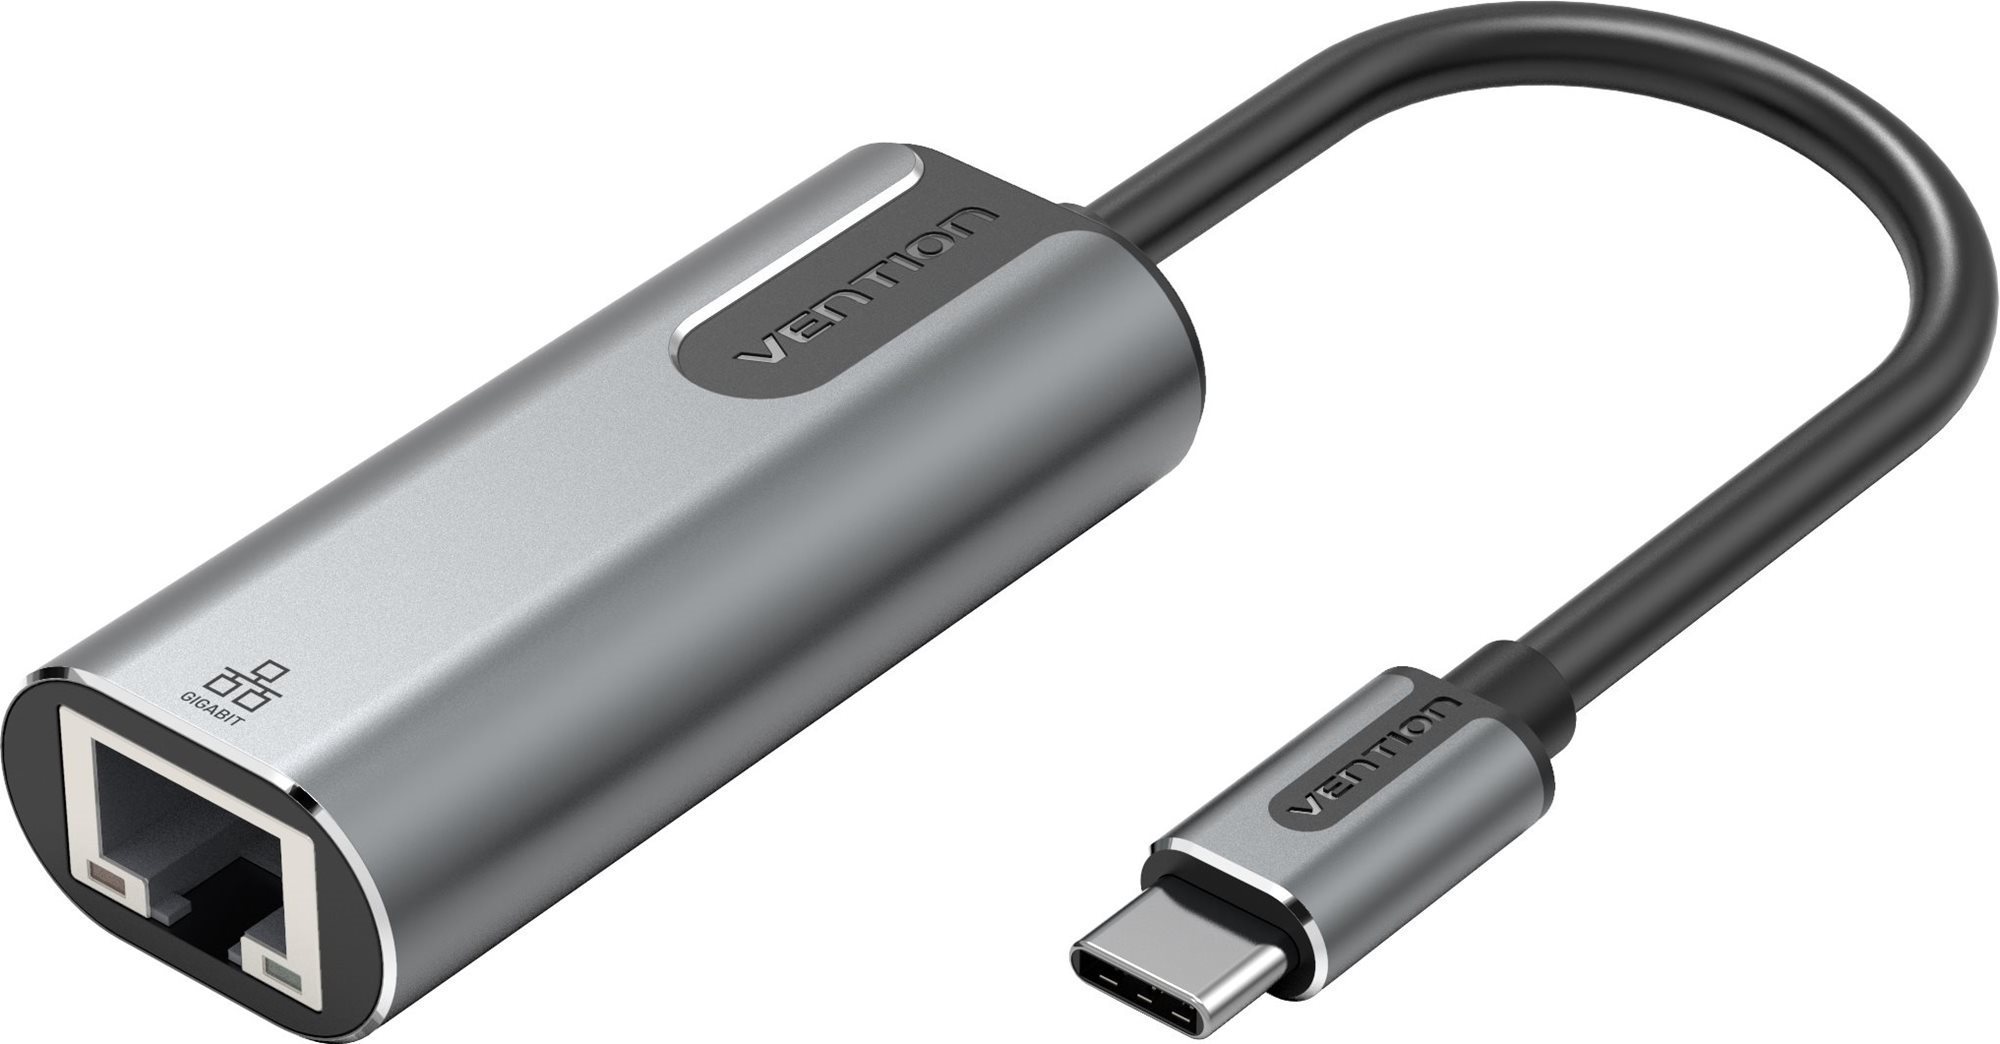 USB Adapter Vention Type-C (USB-C) to RJ-45 Gigabit Ethernet Adapter 0.15M Gray Aluminum Alloy Type